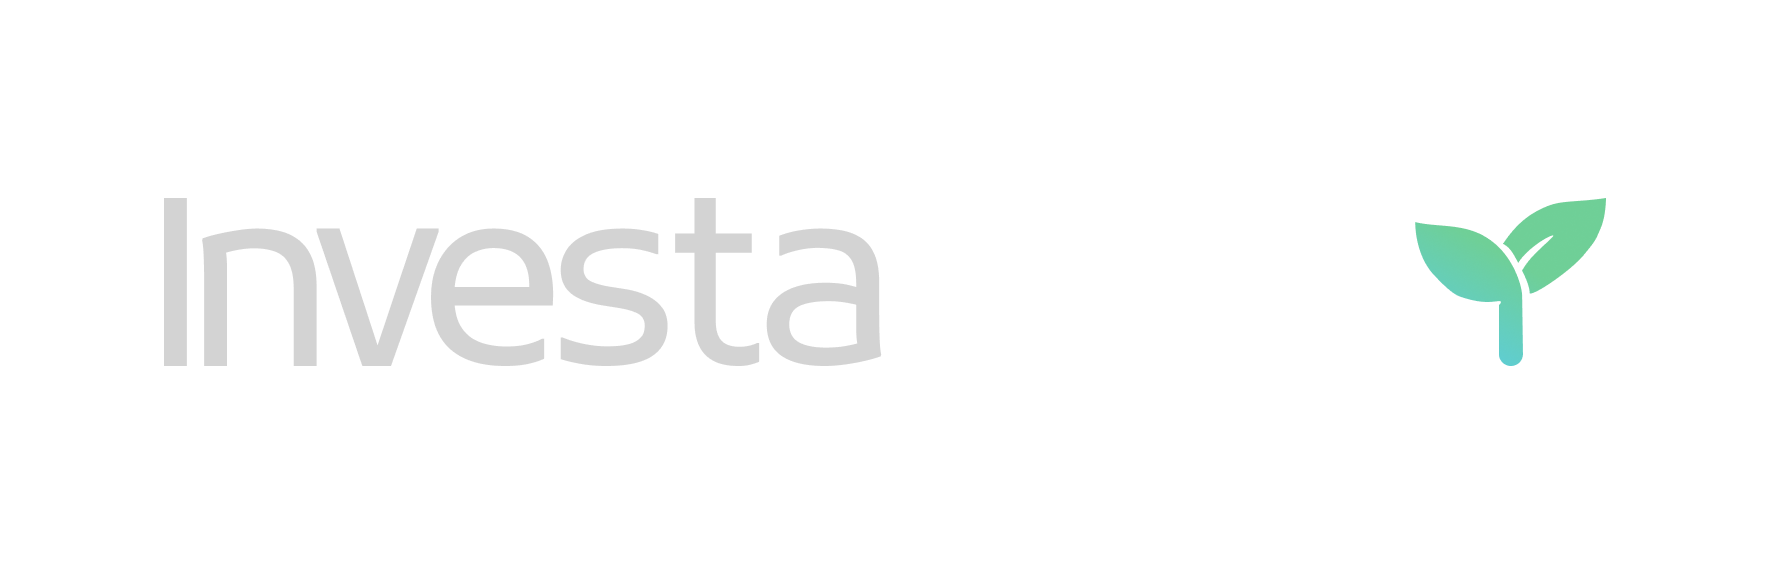 Investaflow logo in color